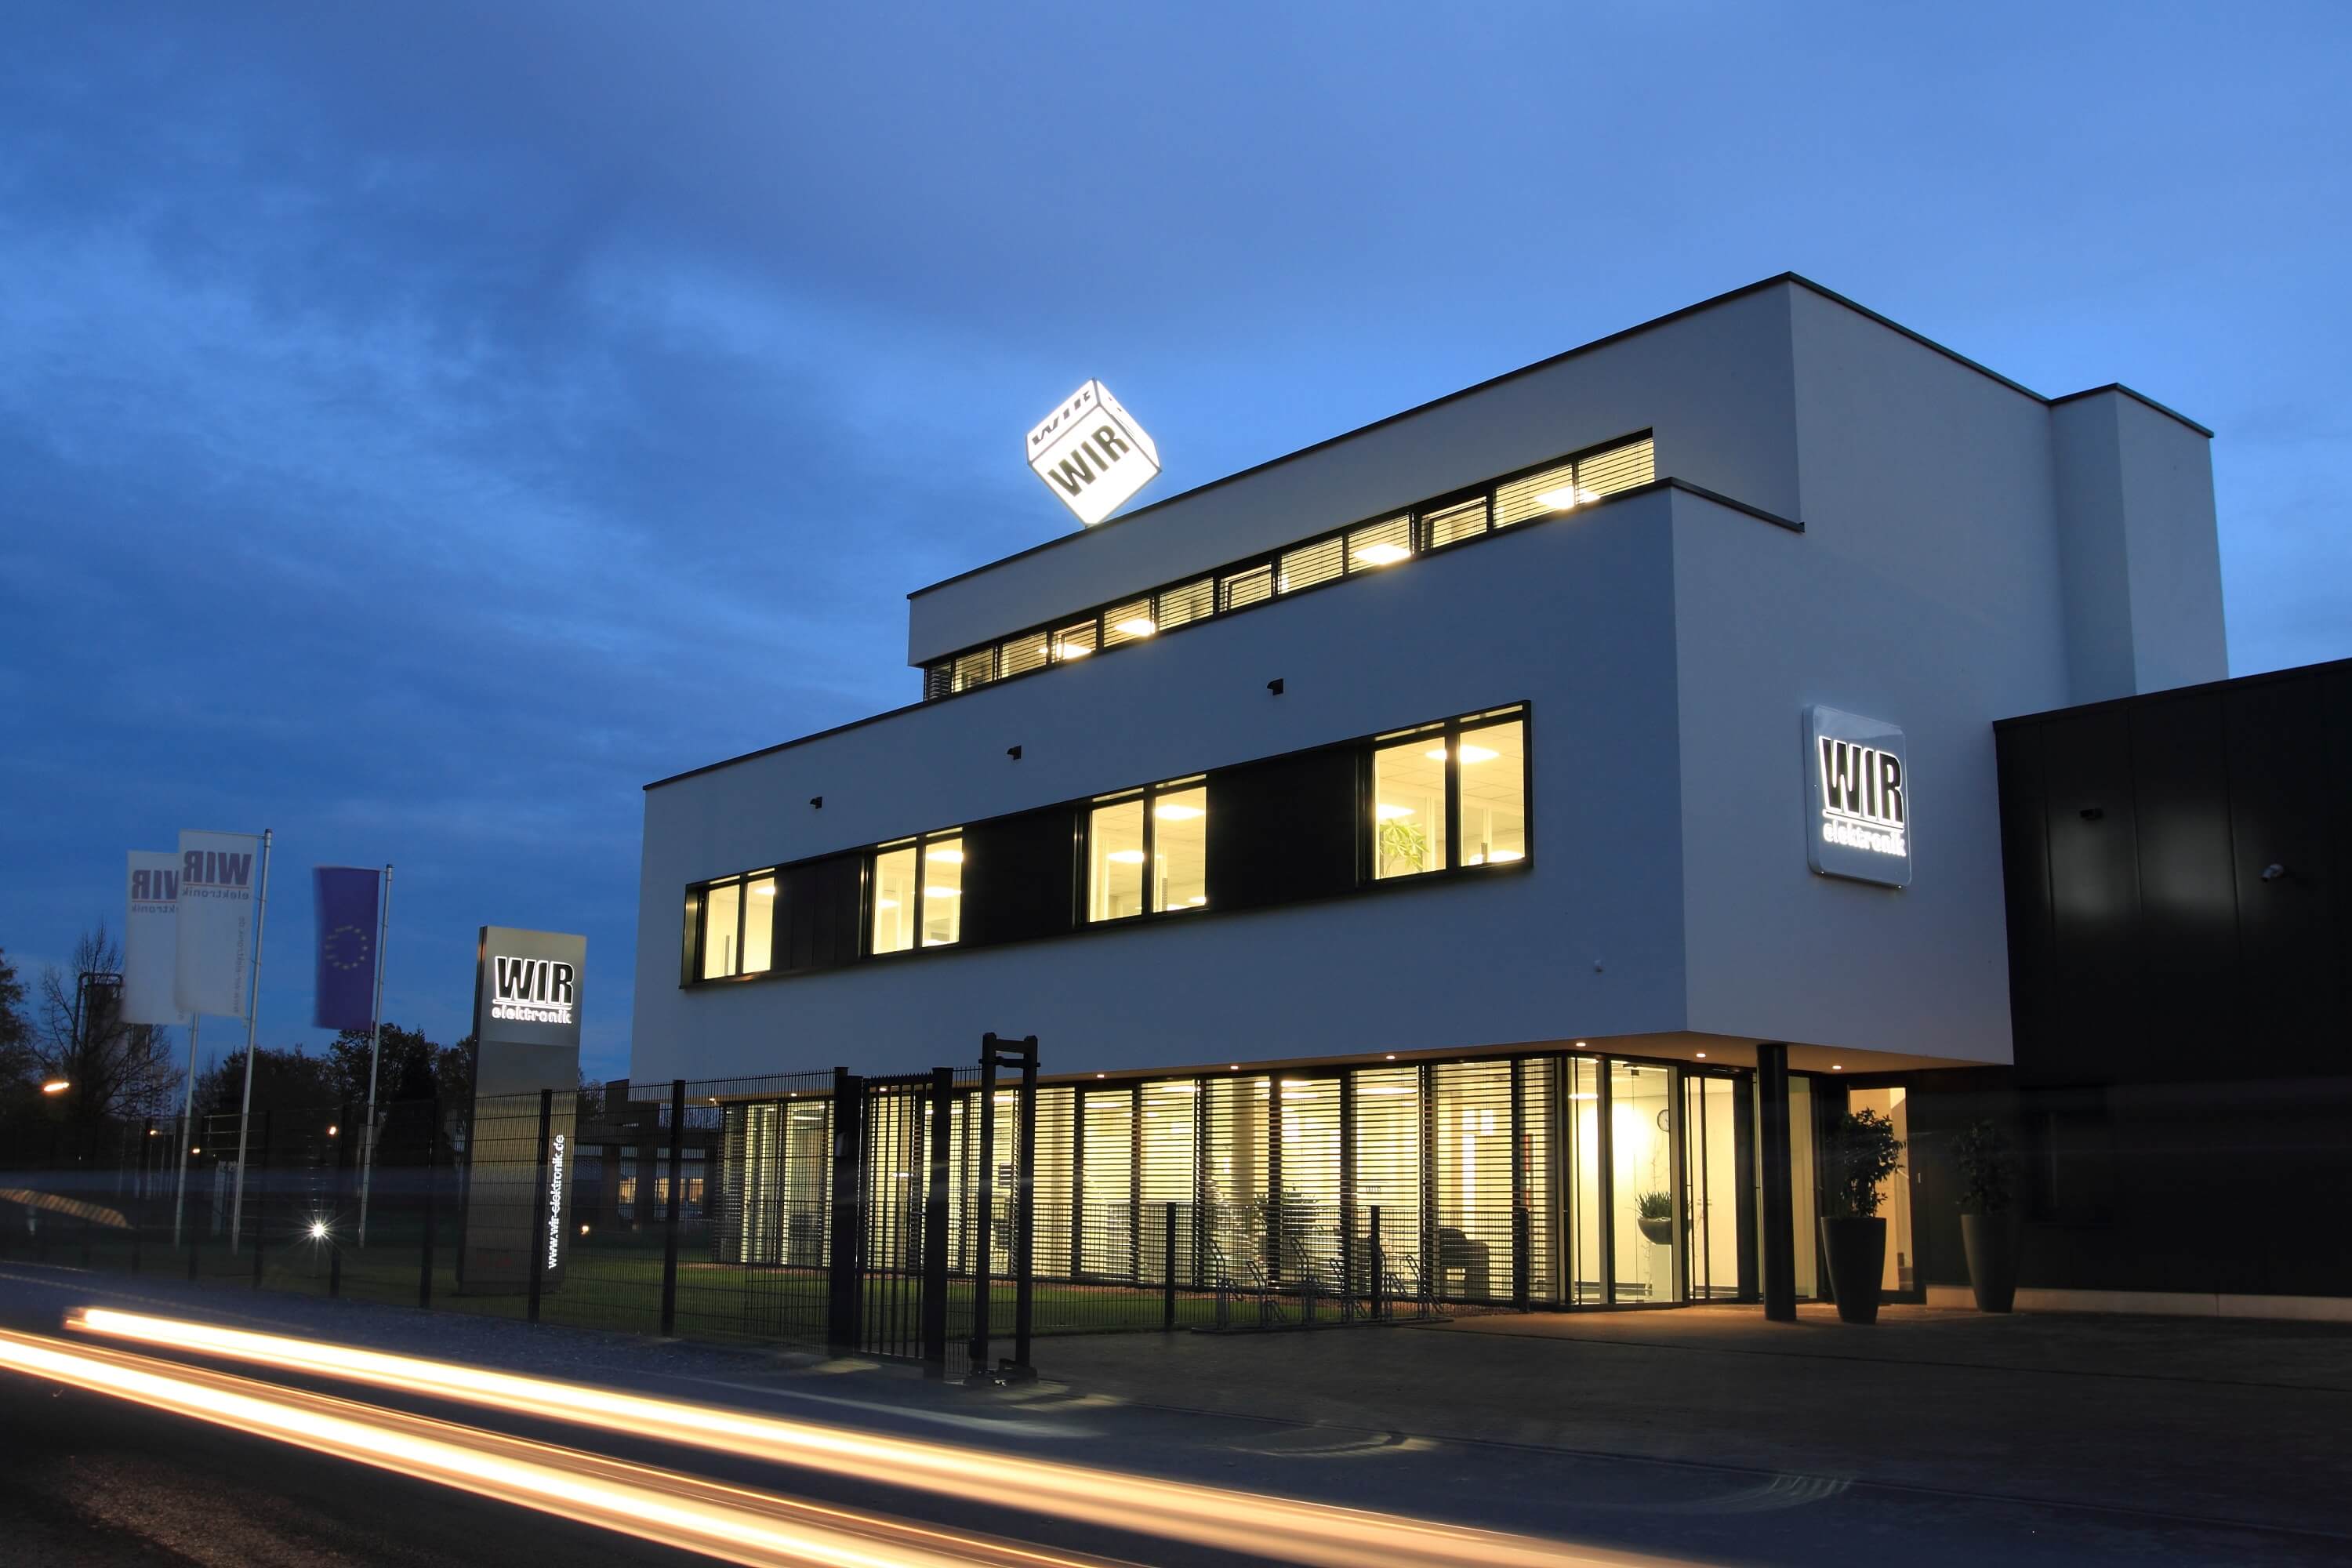 Verwaltungsgebäude_Wir-Elektronik_beleuchtet_Dunkelheit_Logos_Fahnen